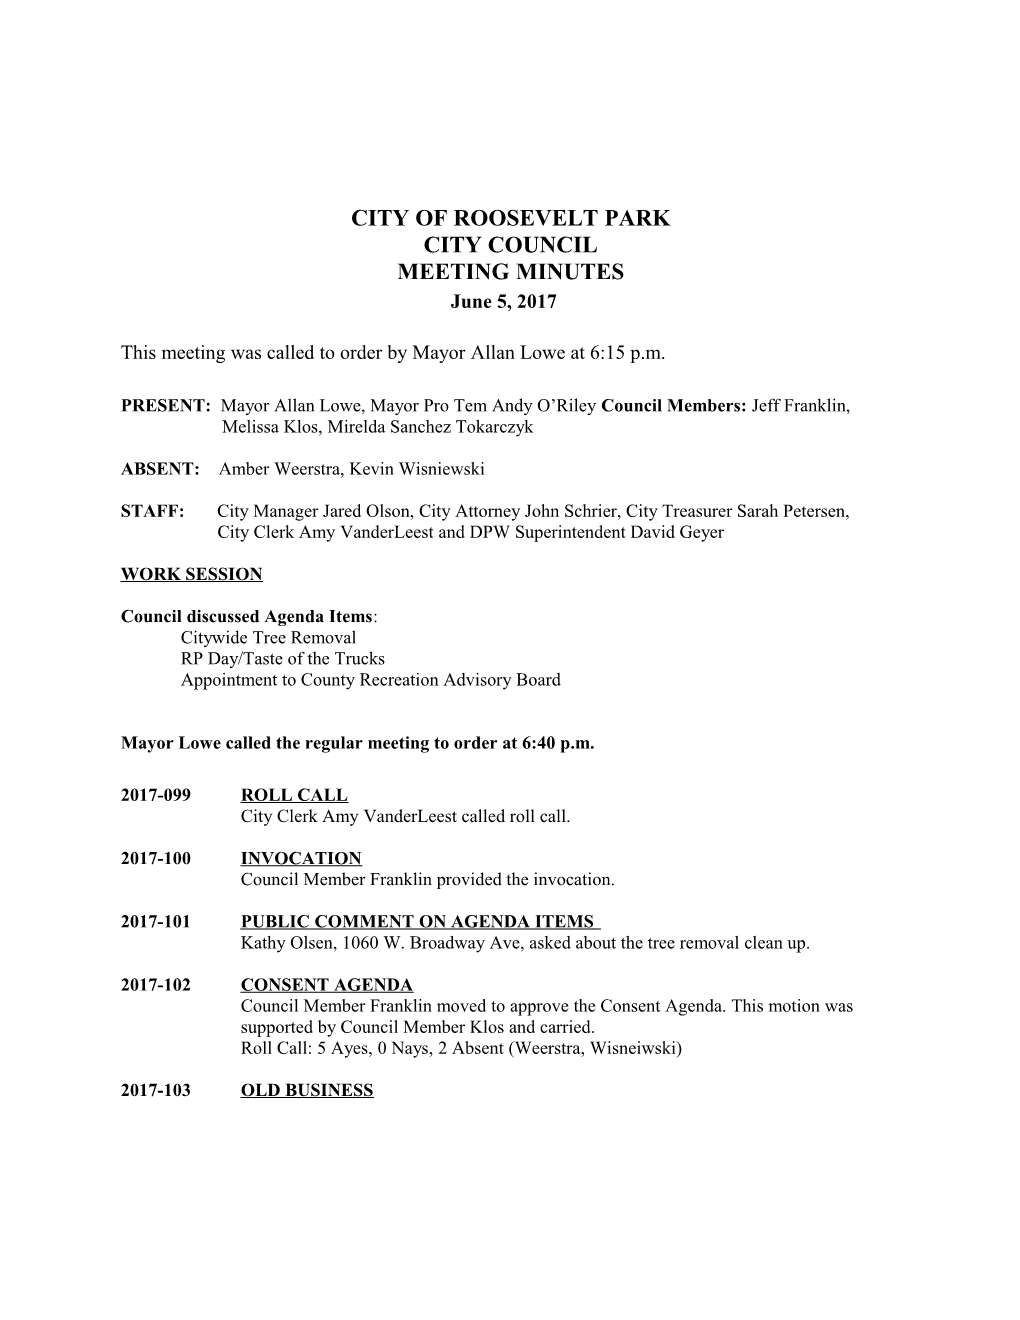 City of Roosevelt Park